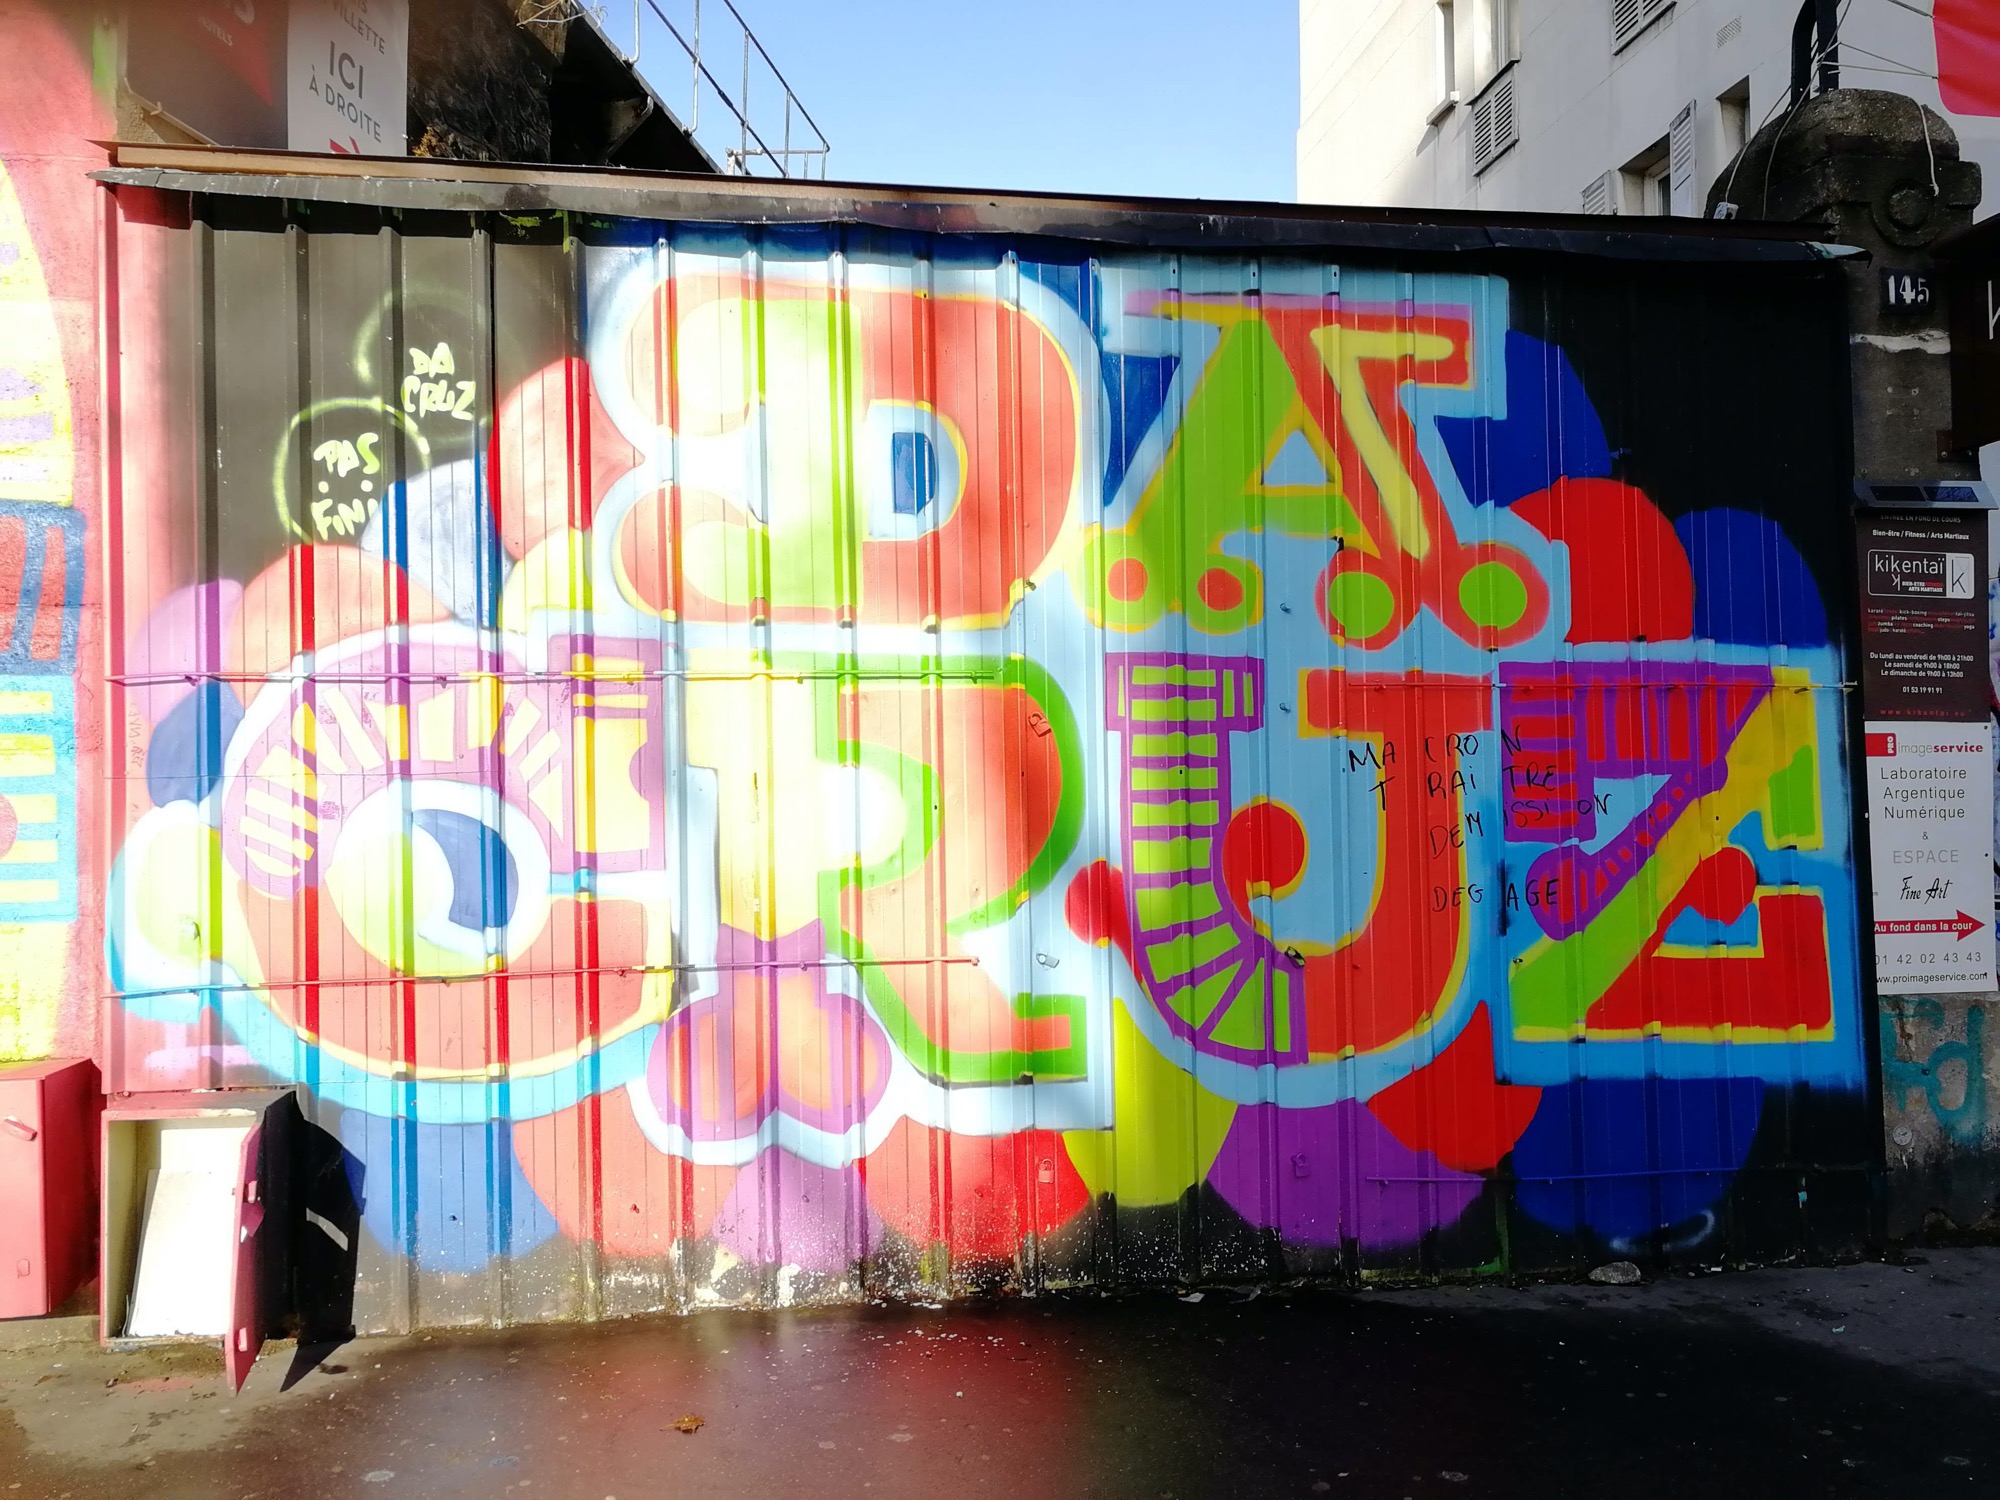 Graffiti 691  by the artist Da Cruz captured by Rabot in Paris France